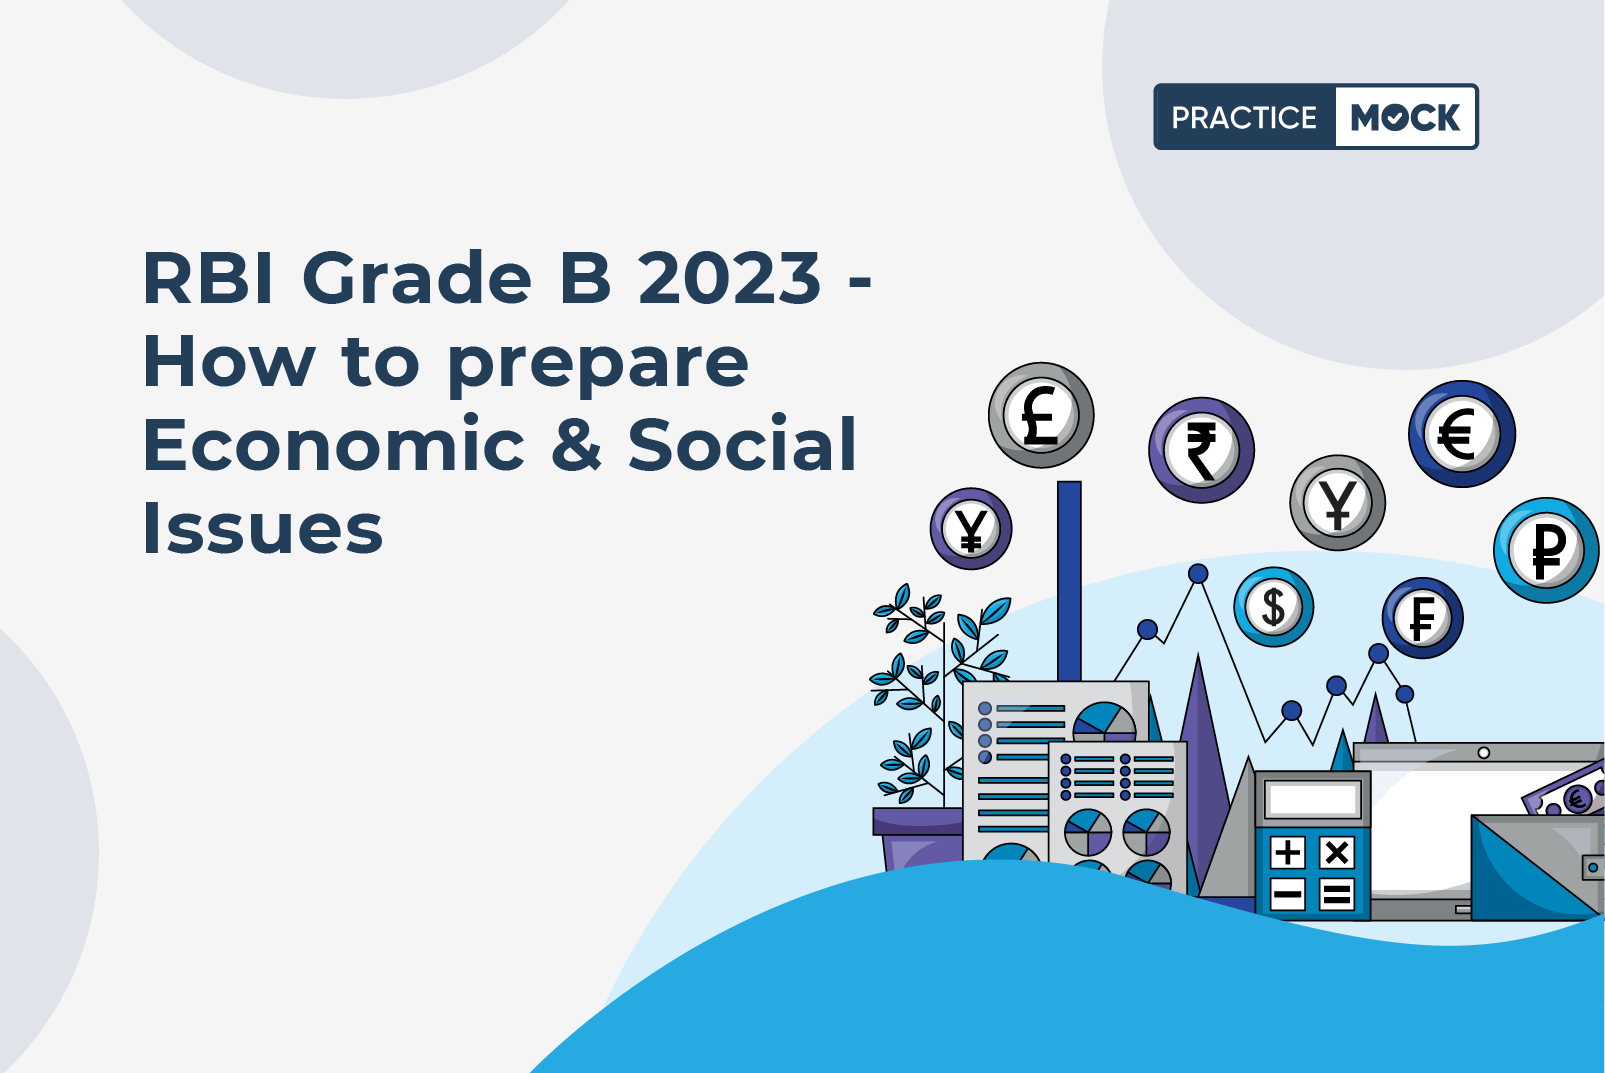 RBI Grade B 2023 - How to prepare Economic & Social Issues